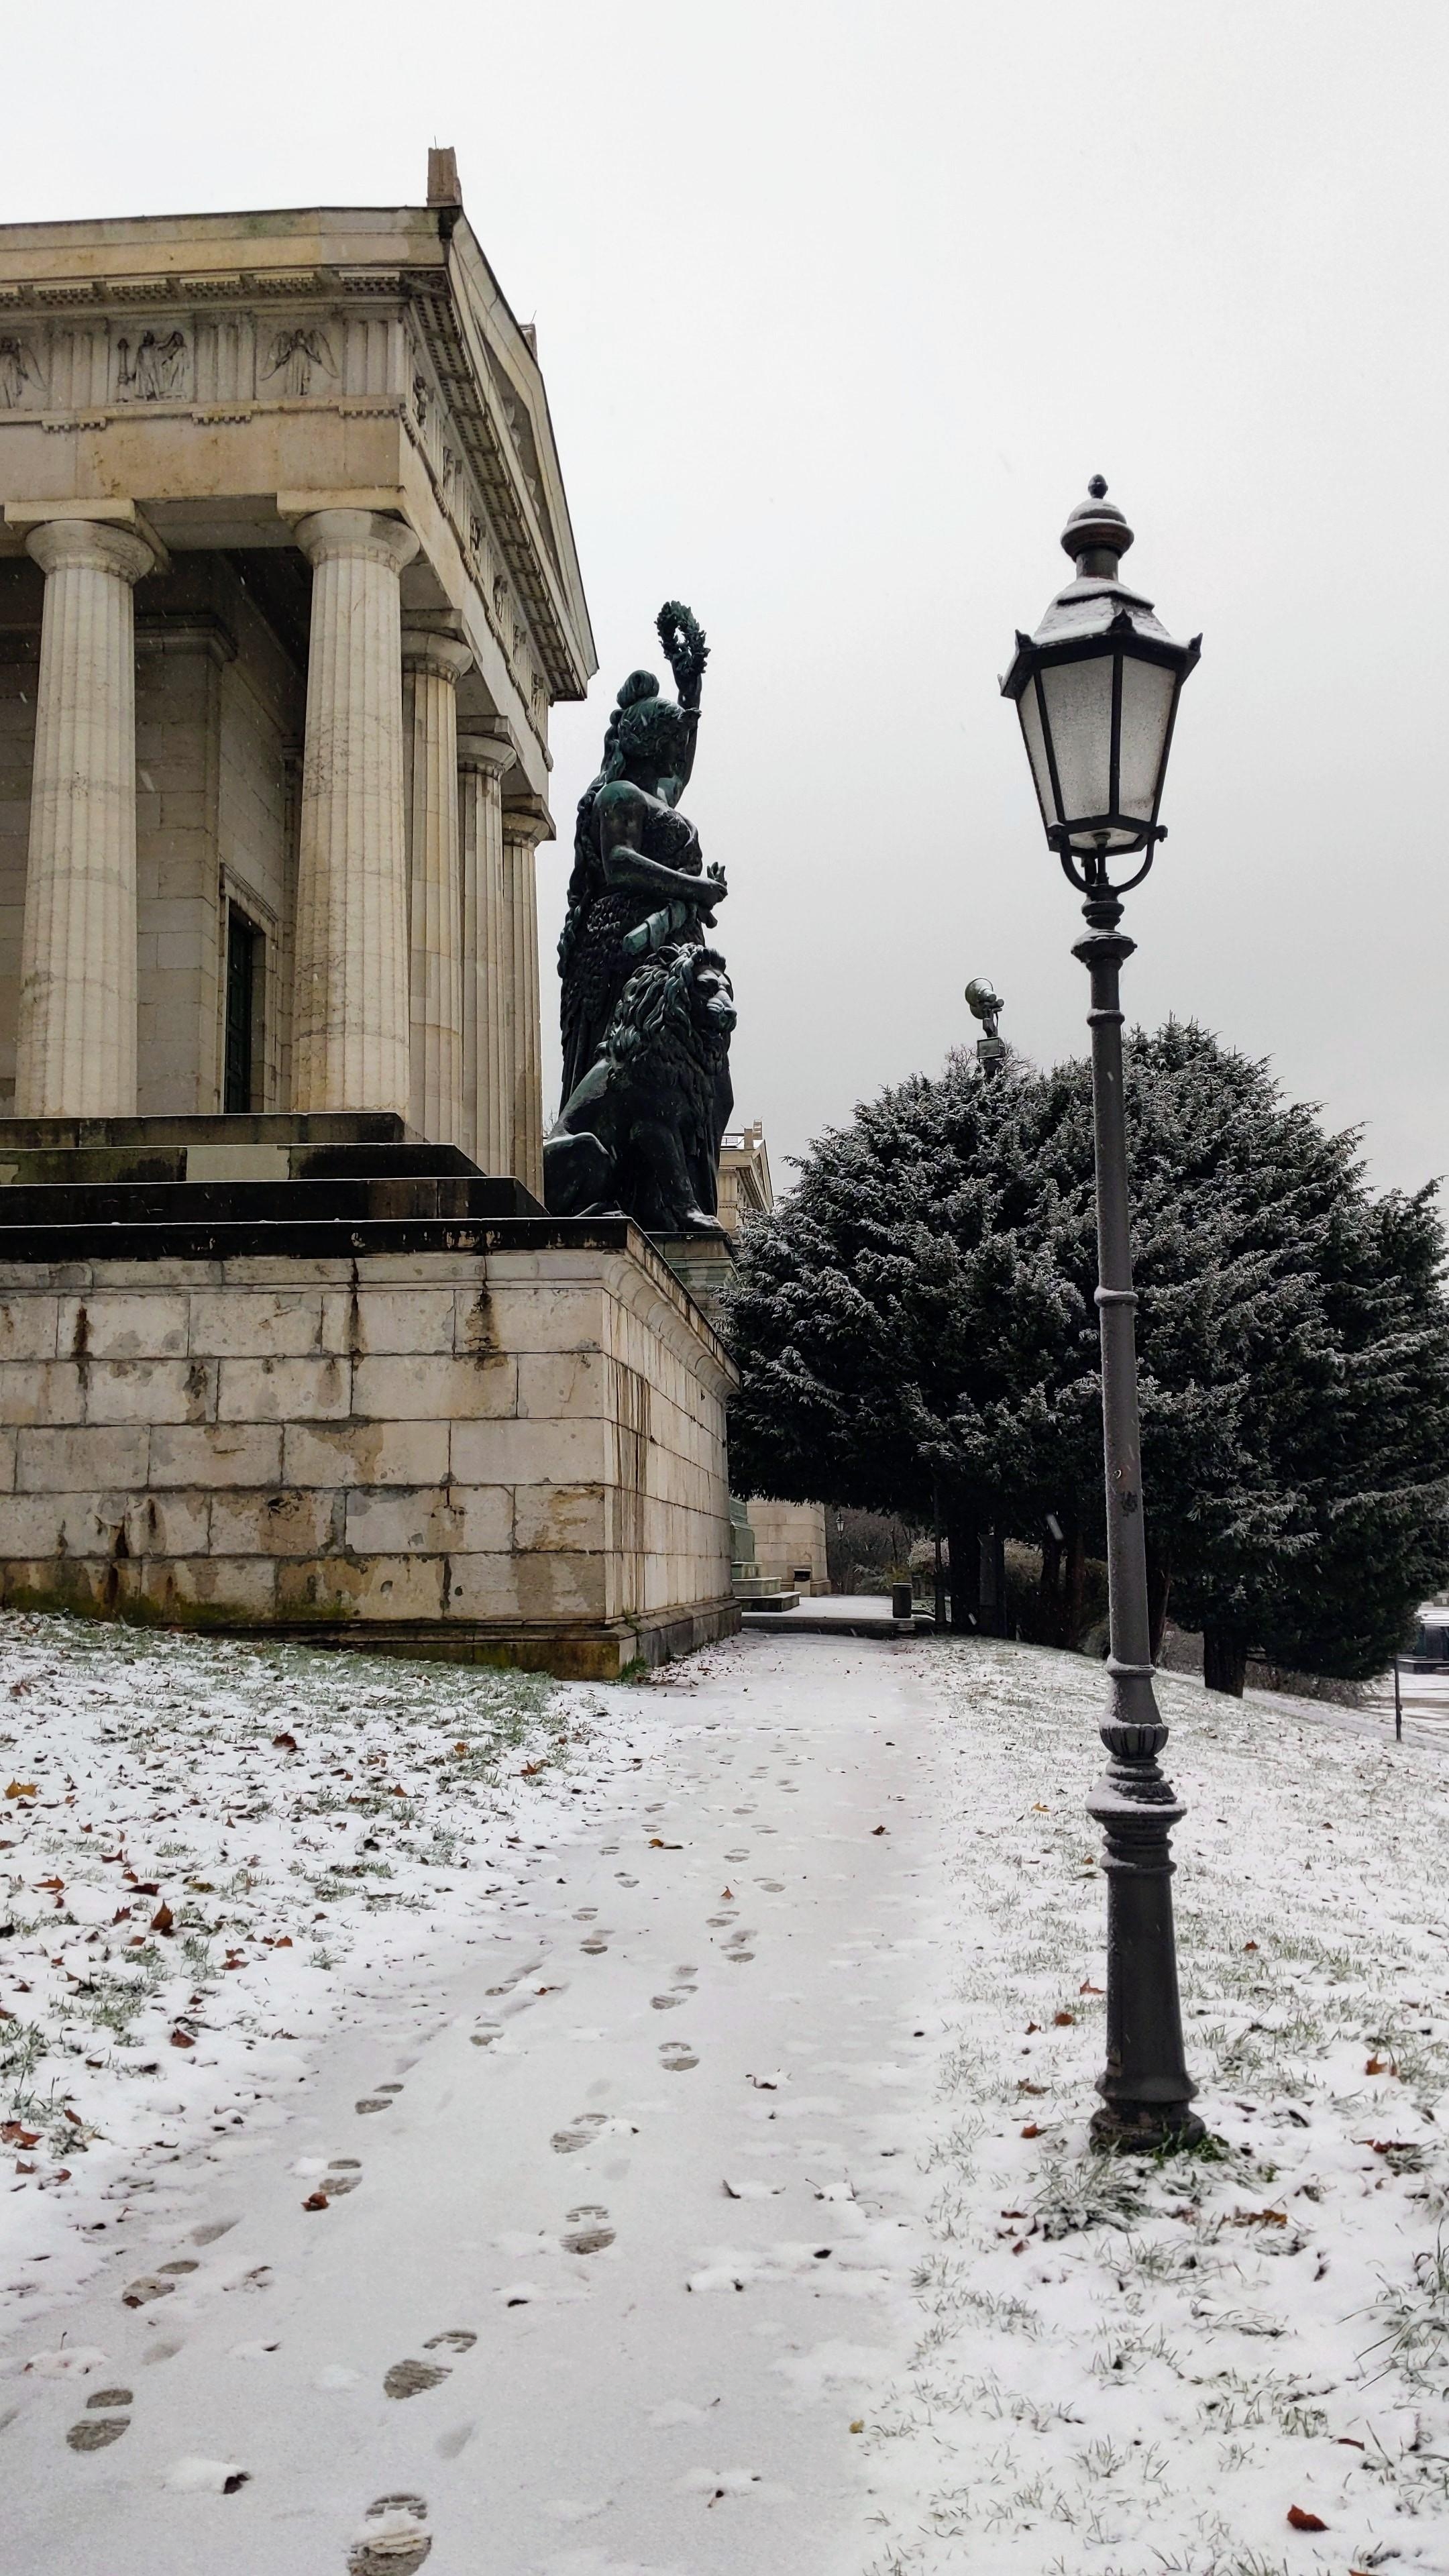 Wintertime 🤍❄️⛄
#Winter #Munich #Bavaria #letitsnow